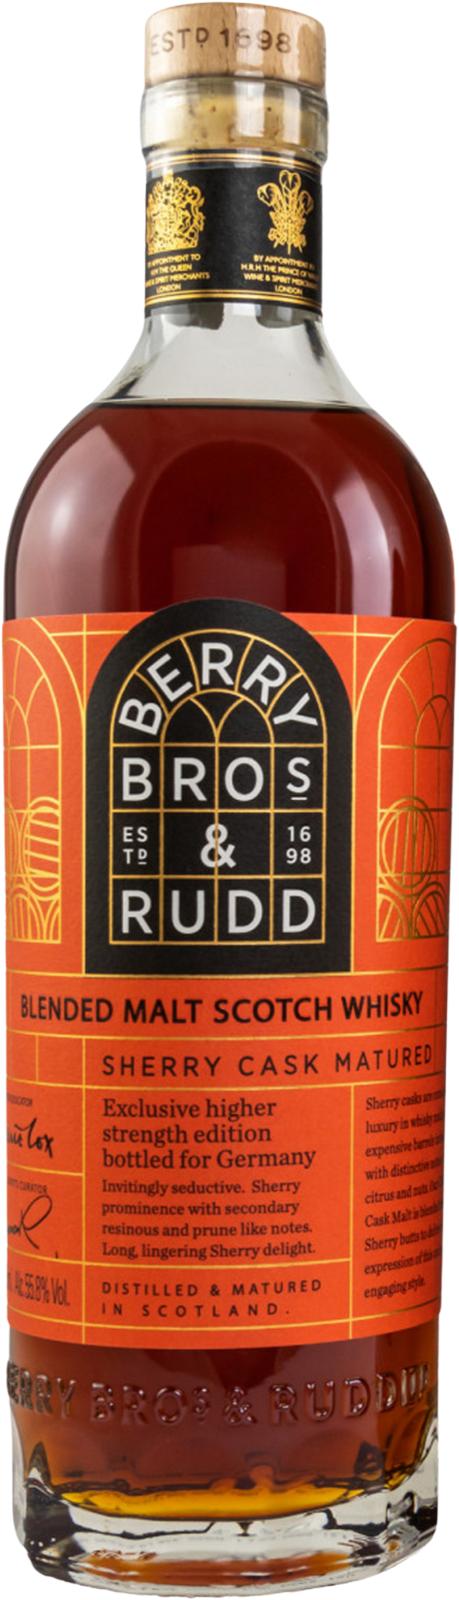 Blended Malt Scotch Whisky Sherry Cask Matured BR